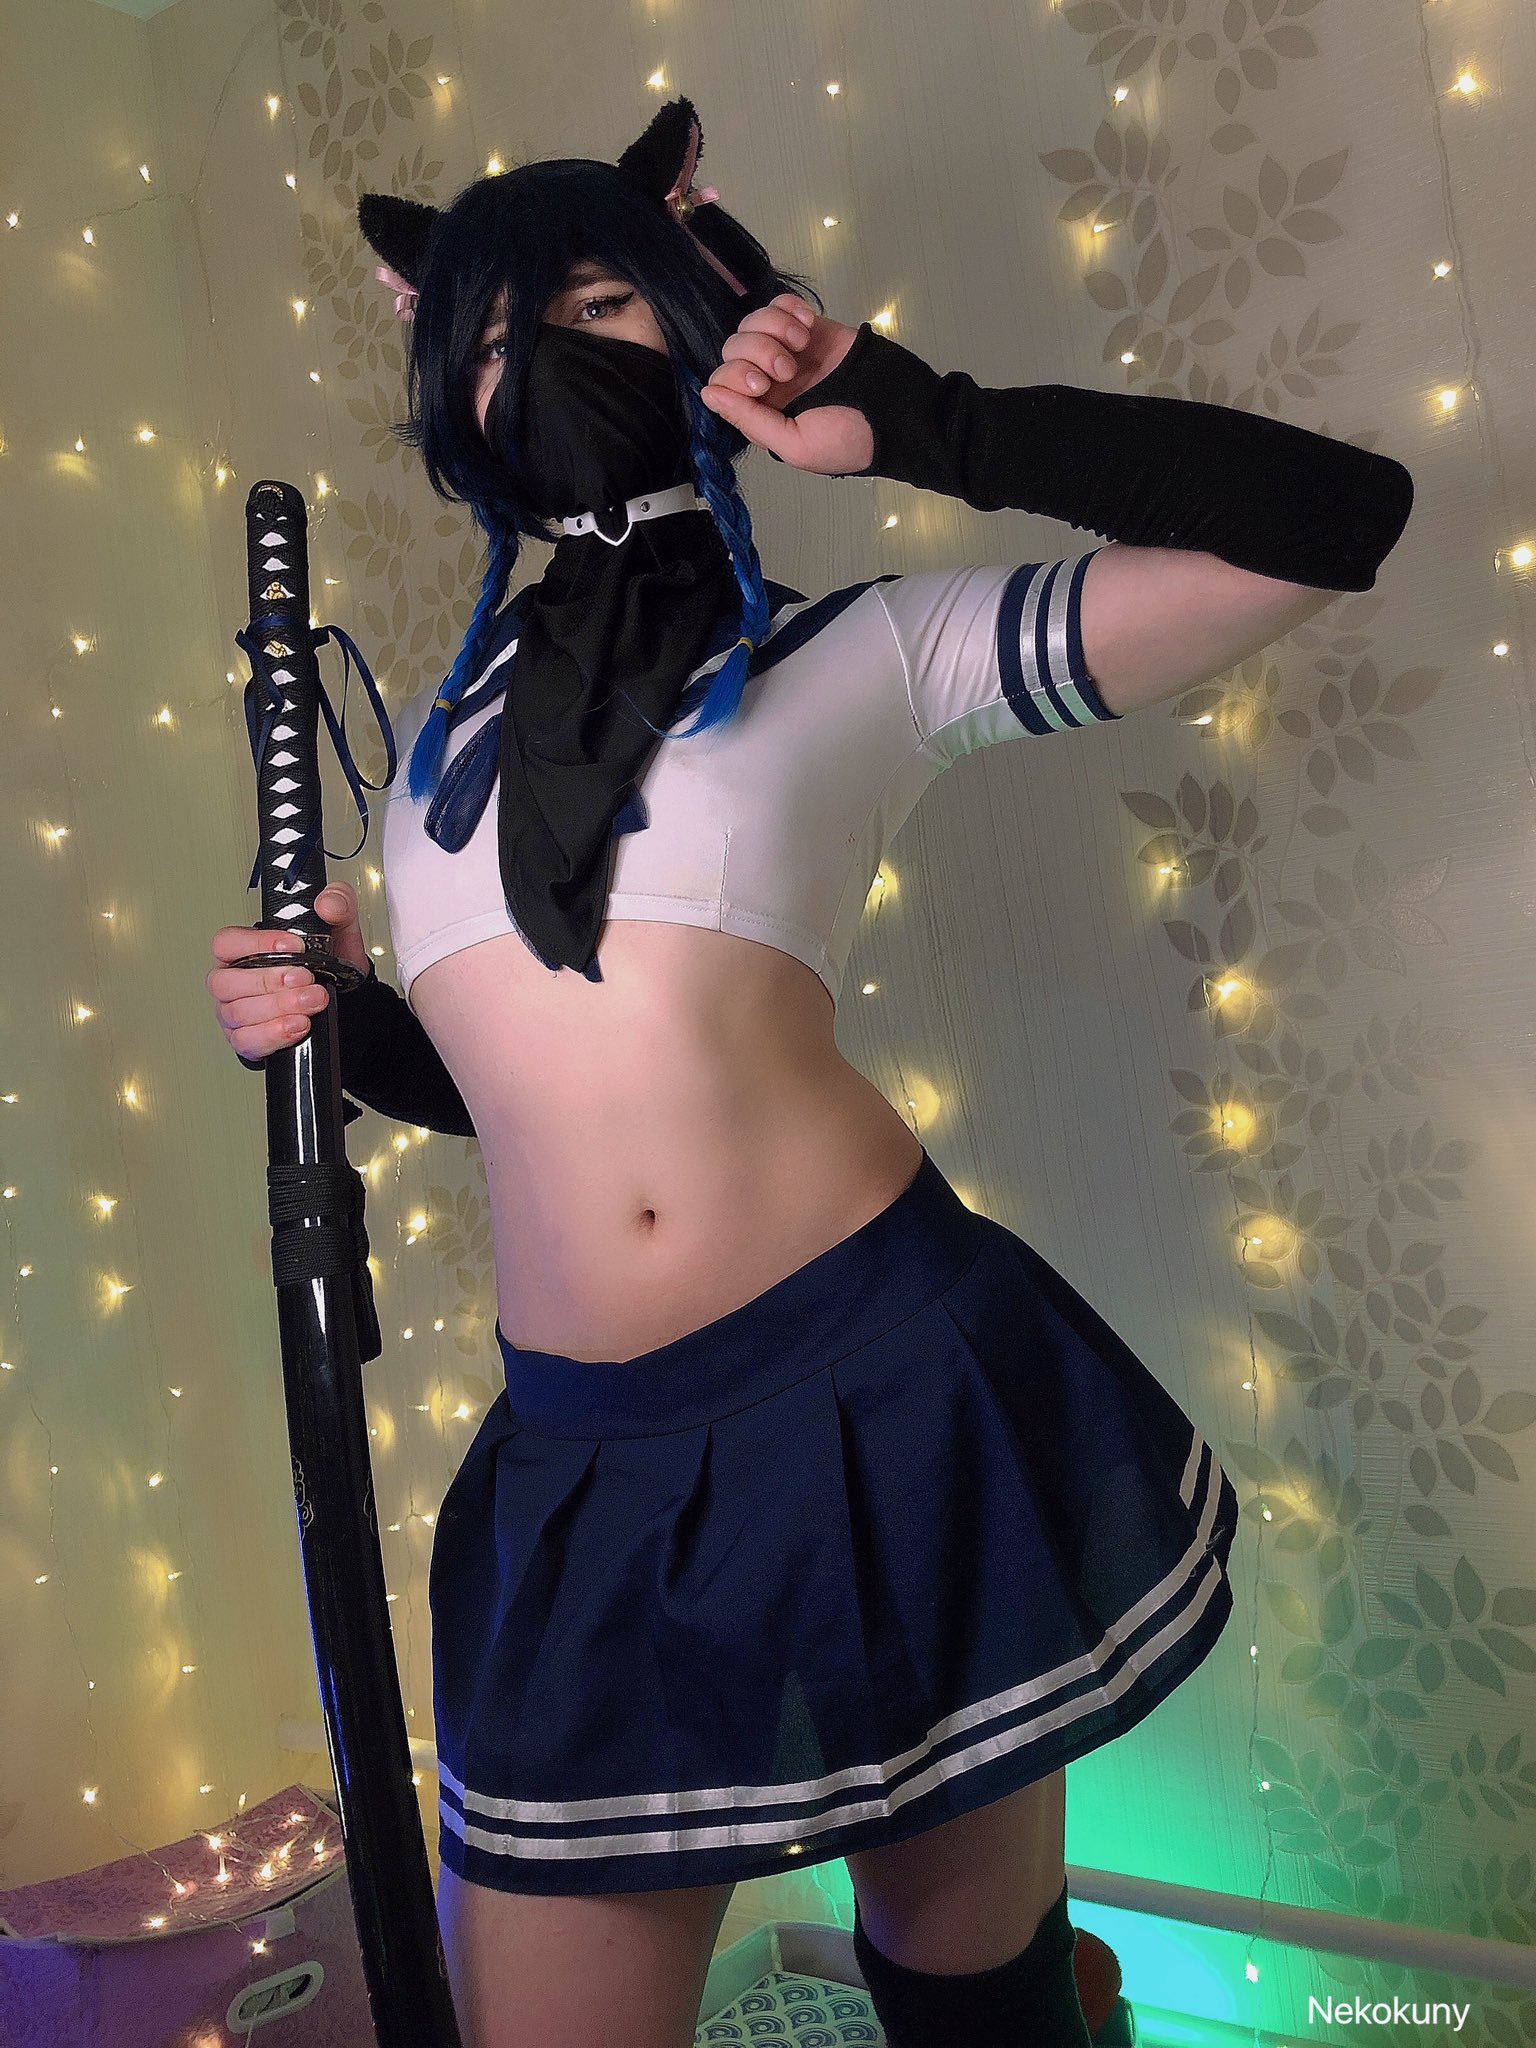 TW Pornstars - Neko Kuny ˚ʚ♡ɞ˚ Anime FemBoy. Twitter. That my Neko Venti  cosplay #GenshinImpact. 11:37 PM - 19 Apr 2021